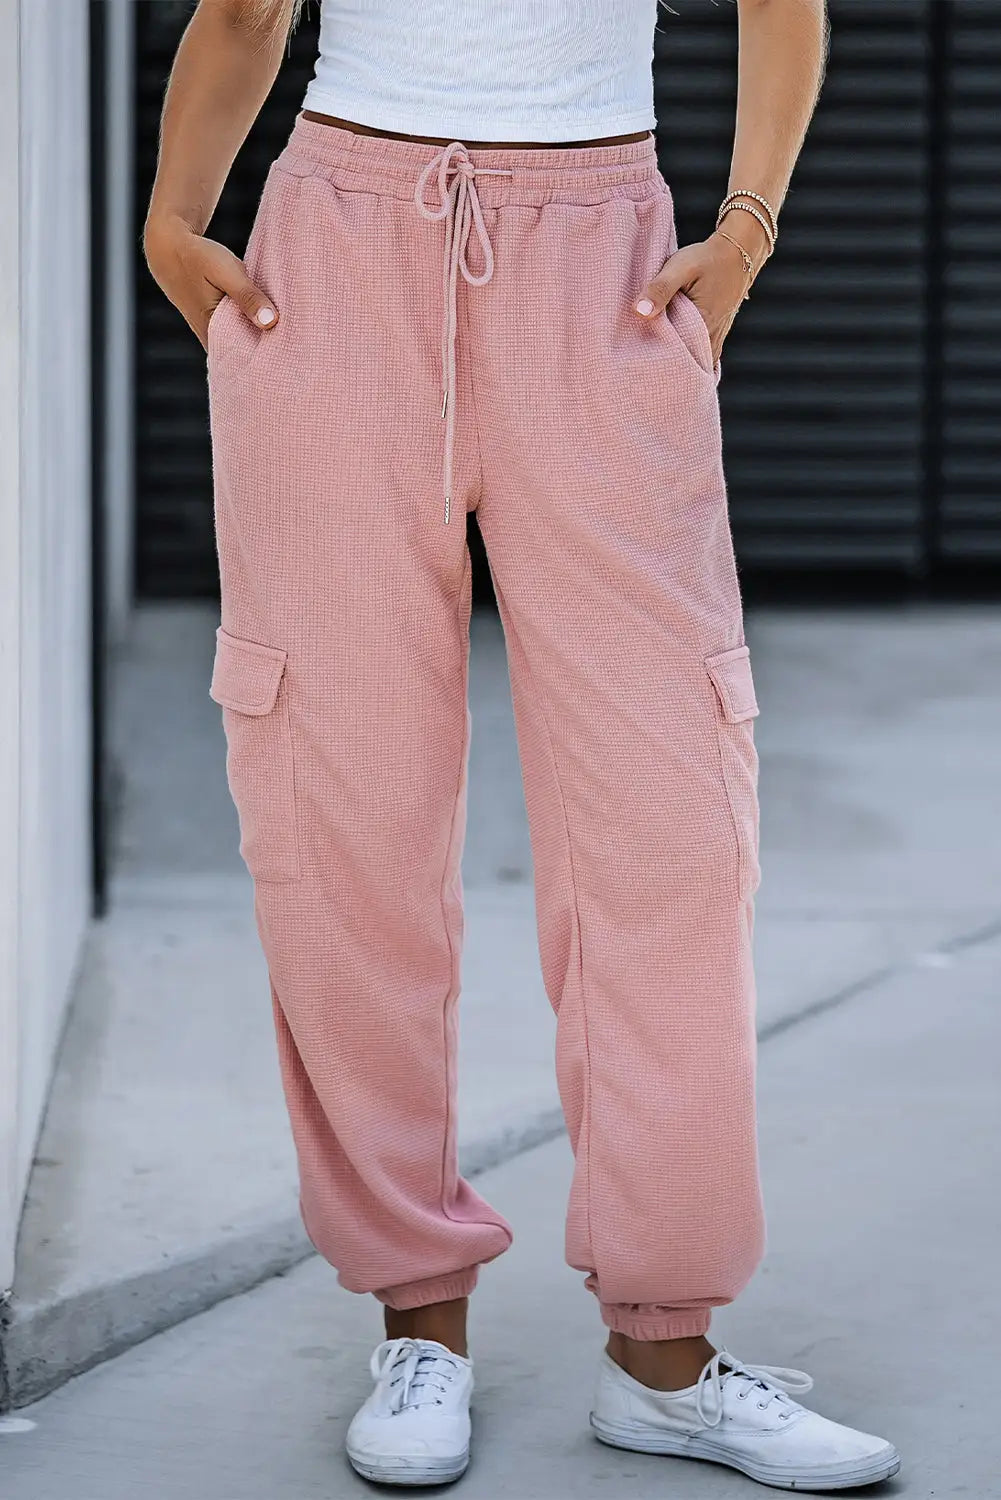 Gray waffle texture cargo pocket jogger pants - pink / l / 95% polyester + 5% elastane - joggers